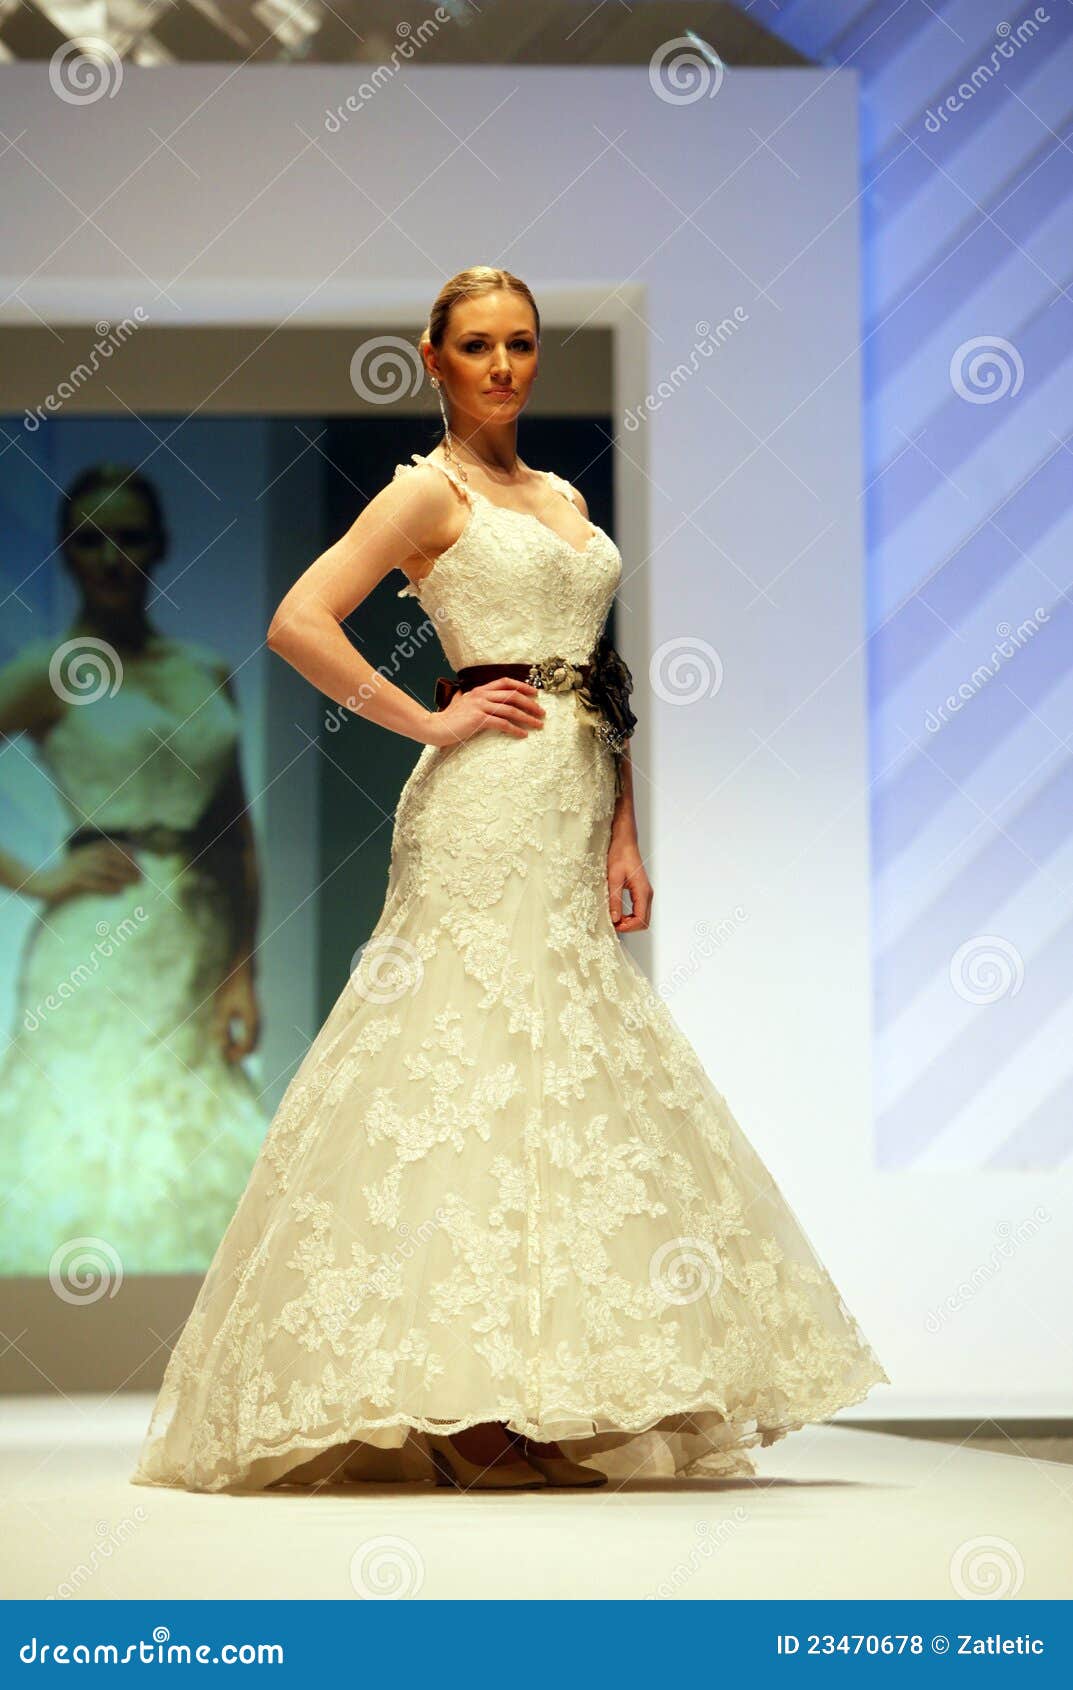 Most Daring Wedding Dresses at Bridal Fashion Week